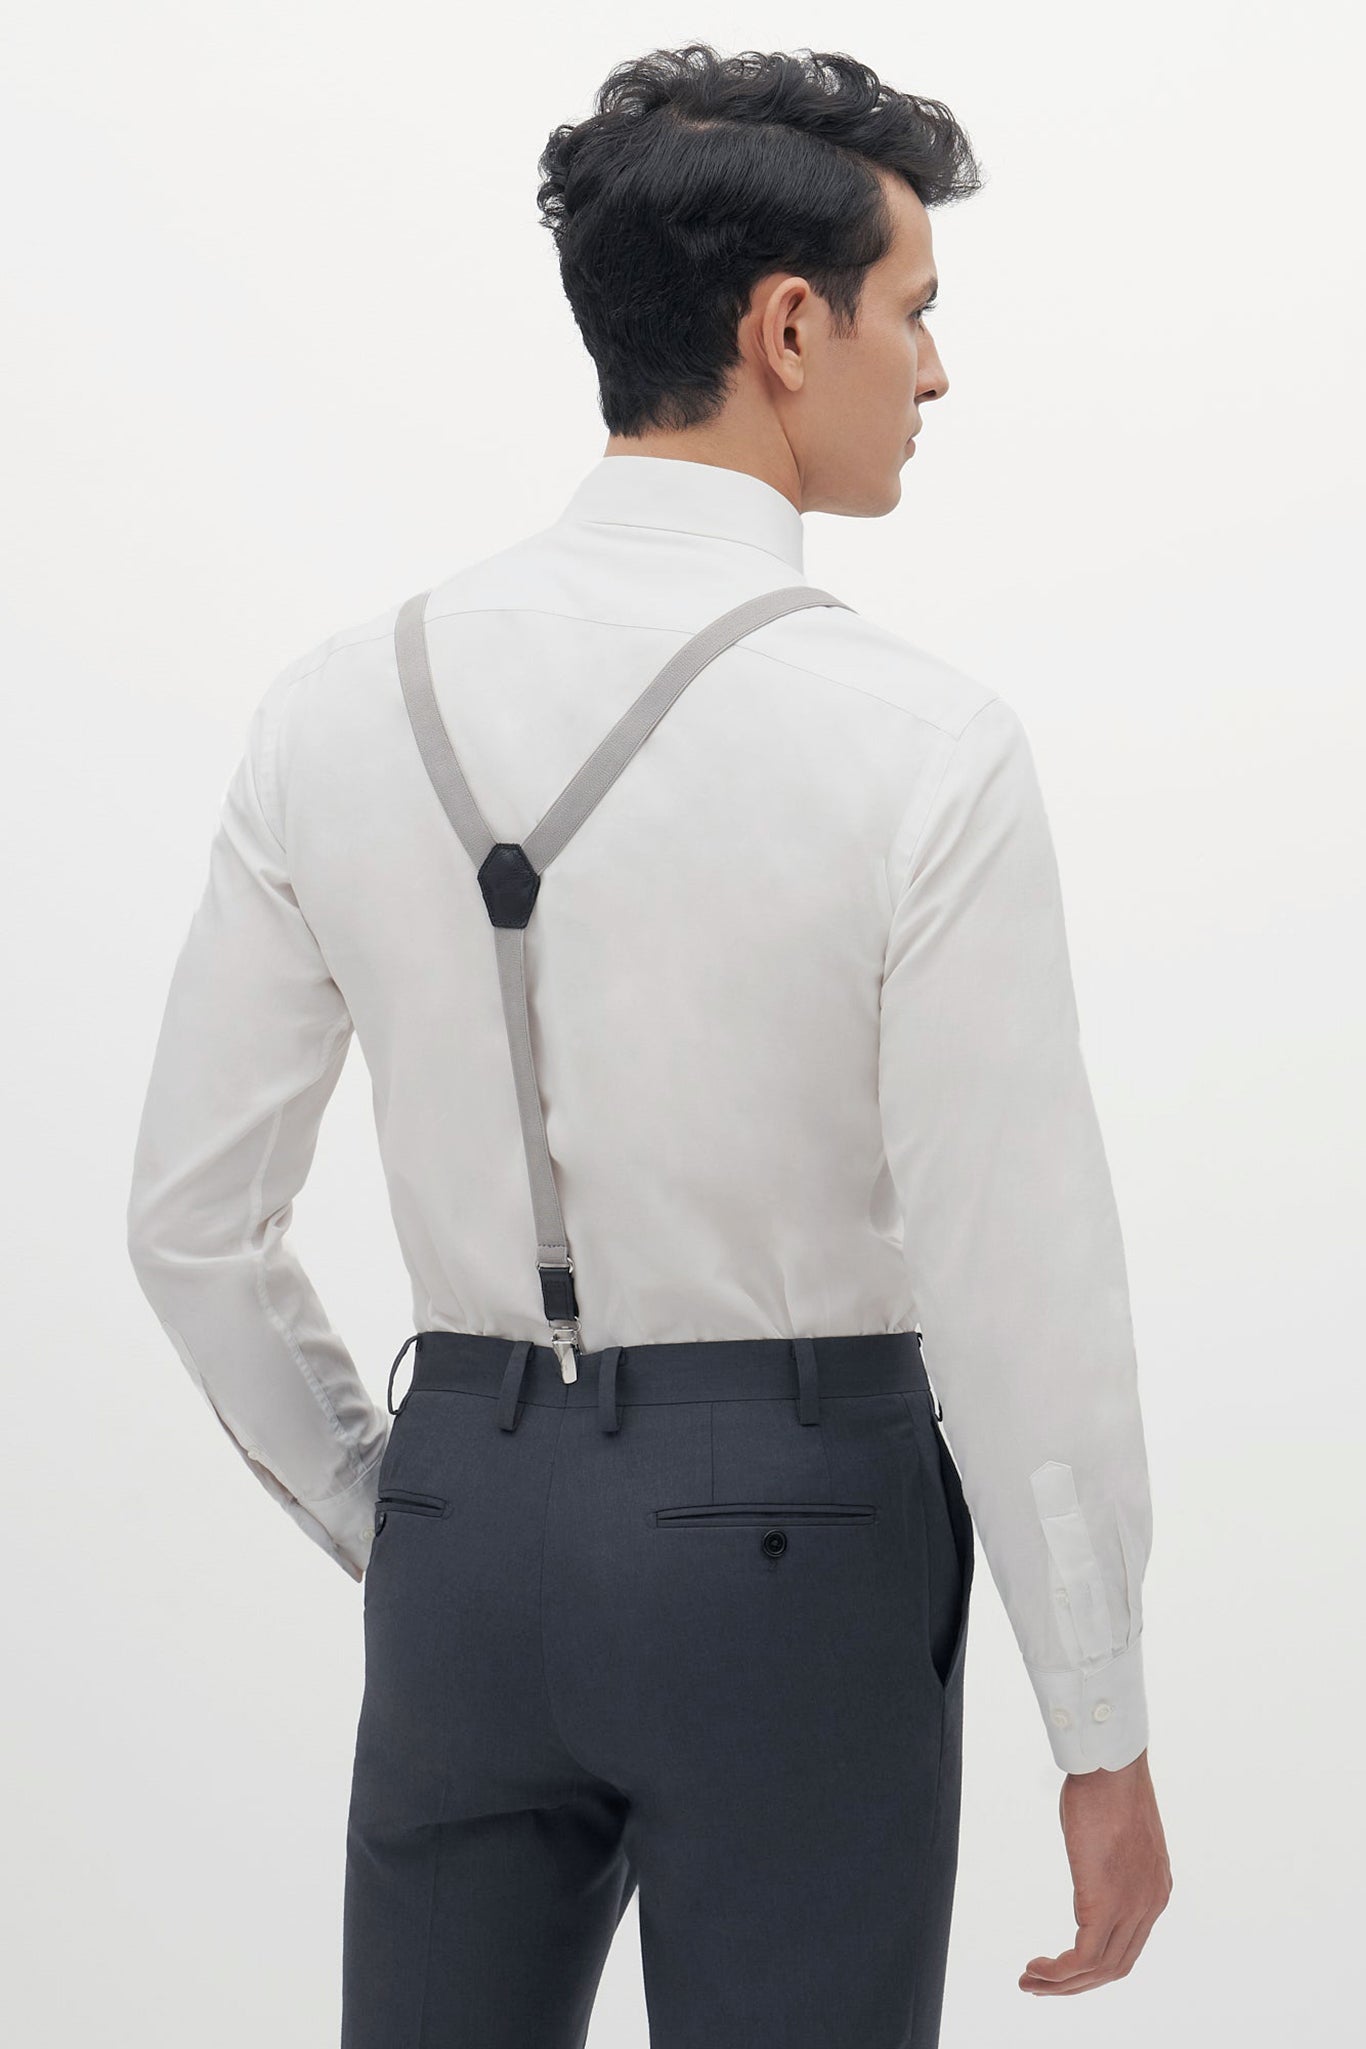 32 Suspenders Ideas for Mens Fashion